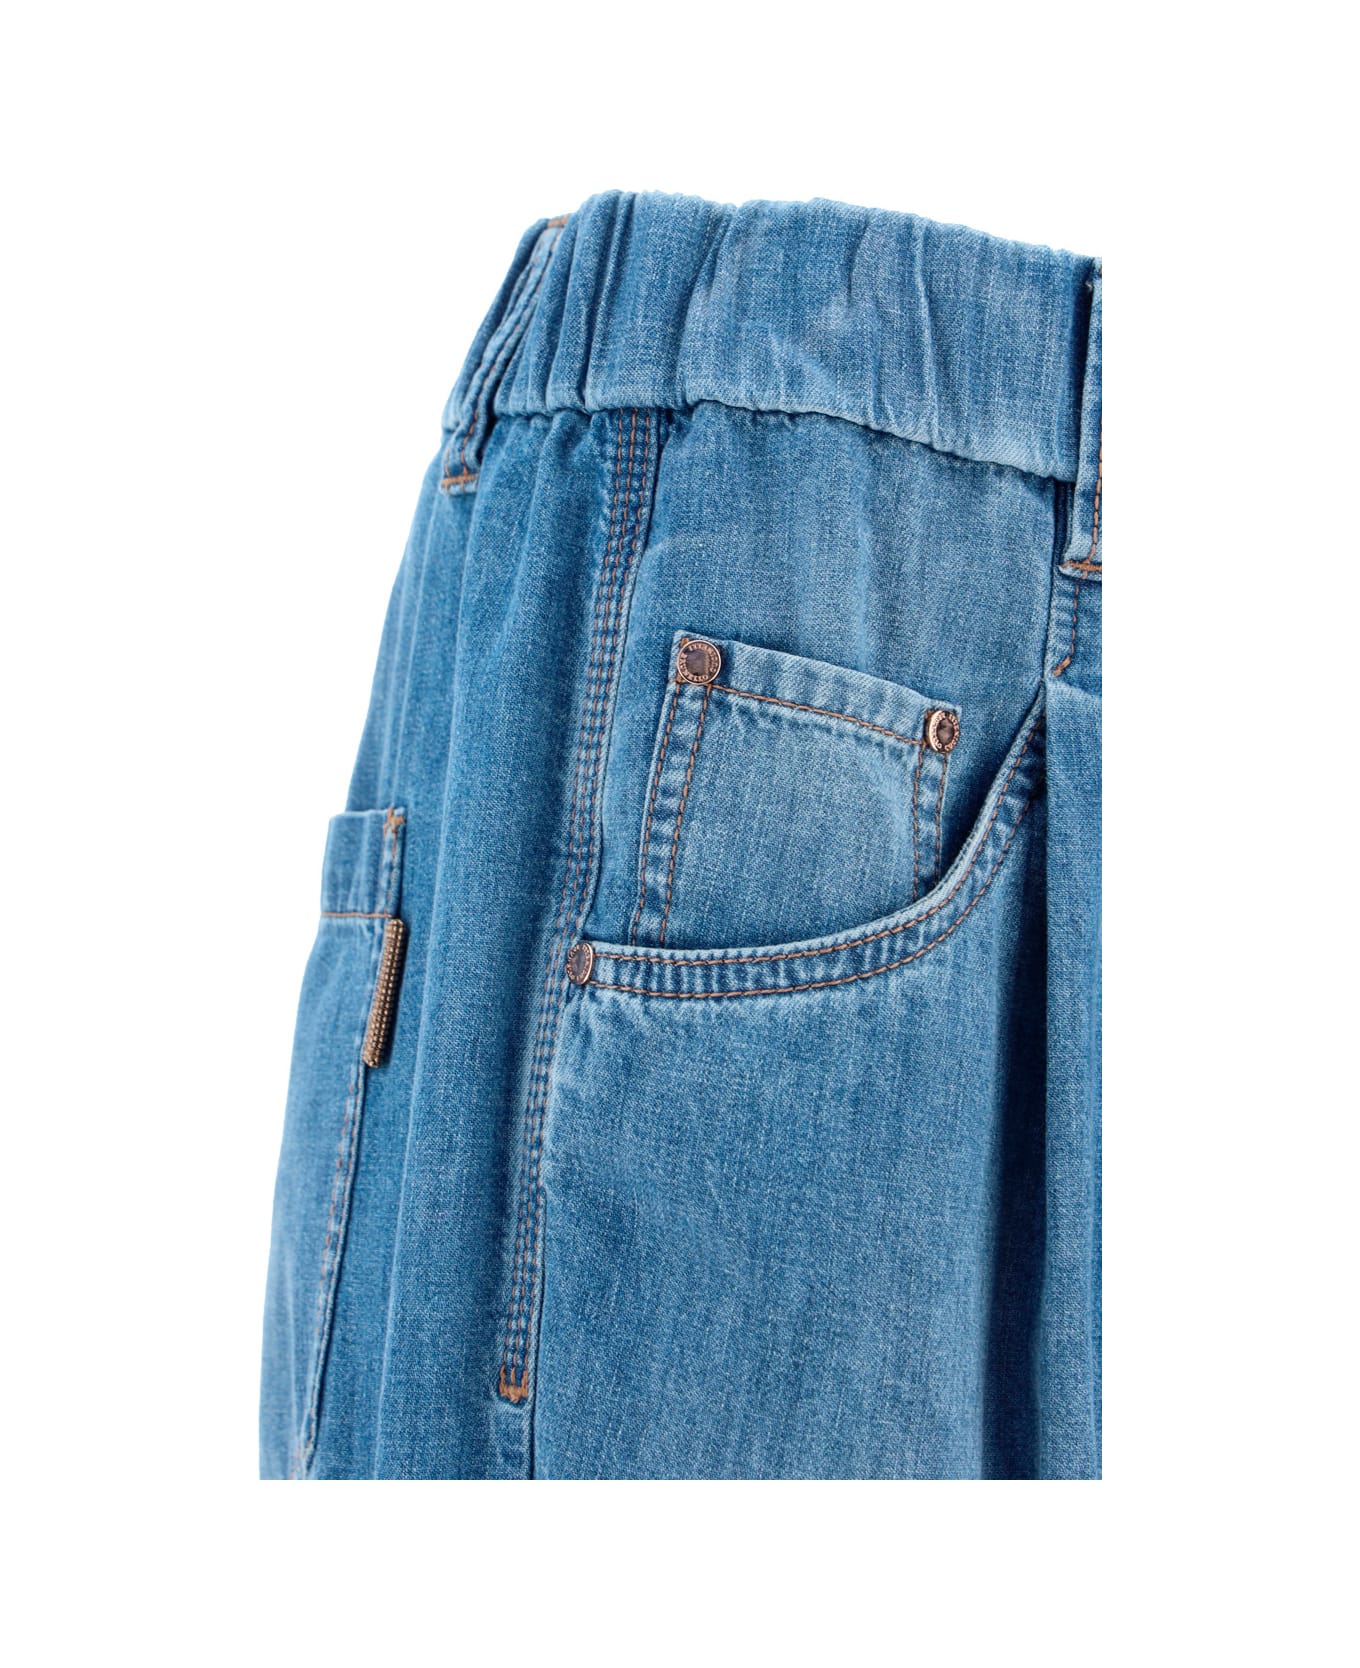 Brunello Cucinelli Five Pocket Denim Jeans - SOFT BLUE DENIM デニム